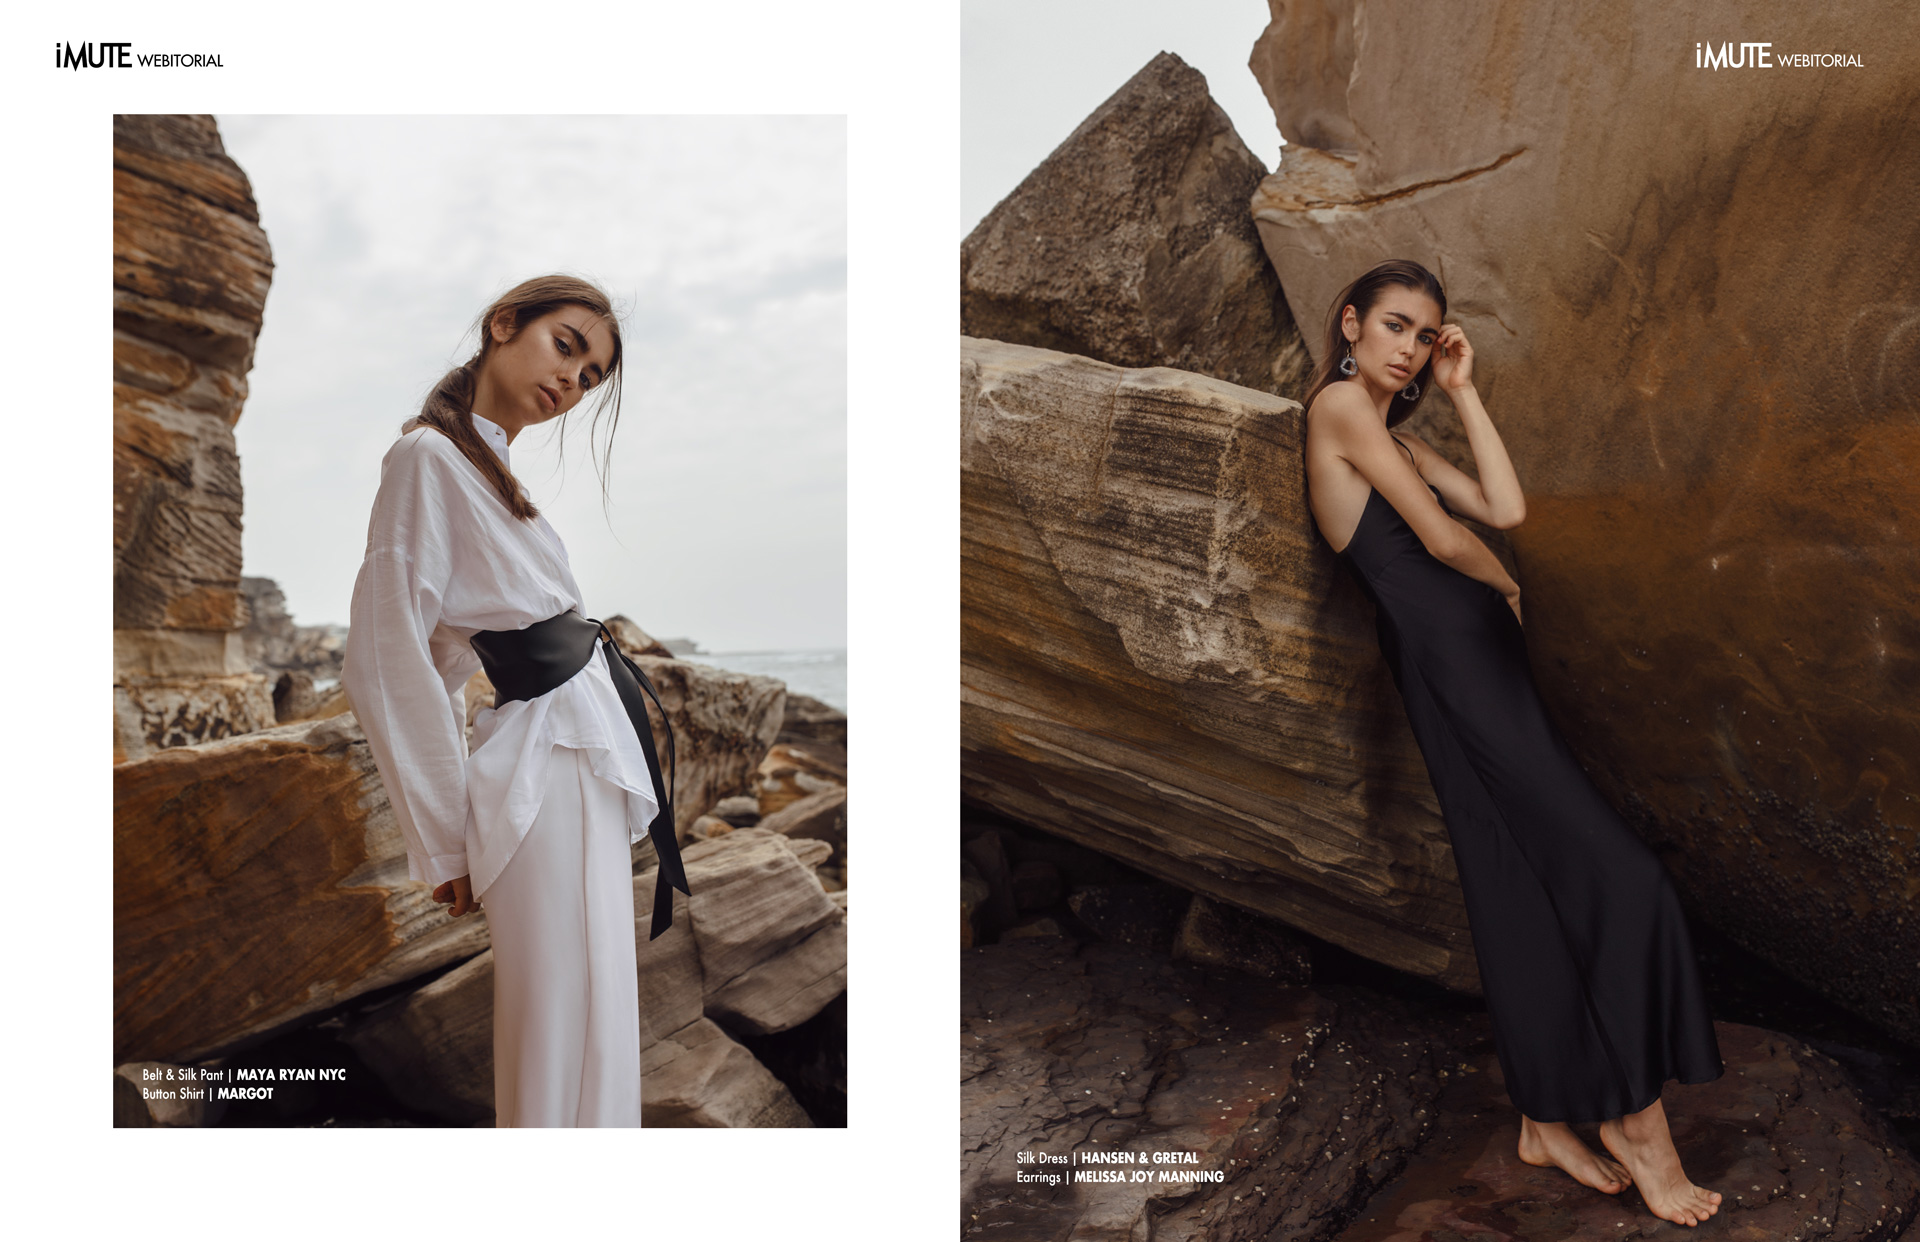 Ocean Eyes webitorial for iMute Magazine PHOTOGRAPHER | Rachel Webb MODEL | Emilee Maccormack @ Chadwick Models STYLIST | Maya Ryan MAKEUP & HAIR | Eve Lyn